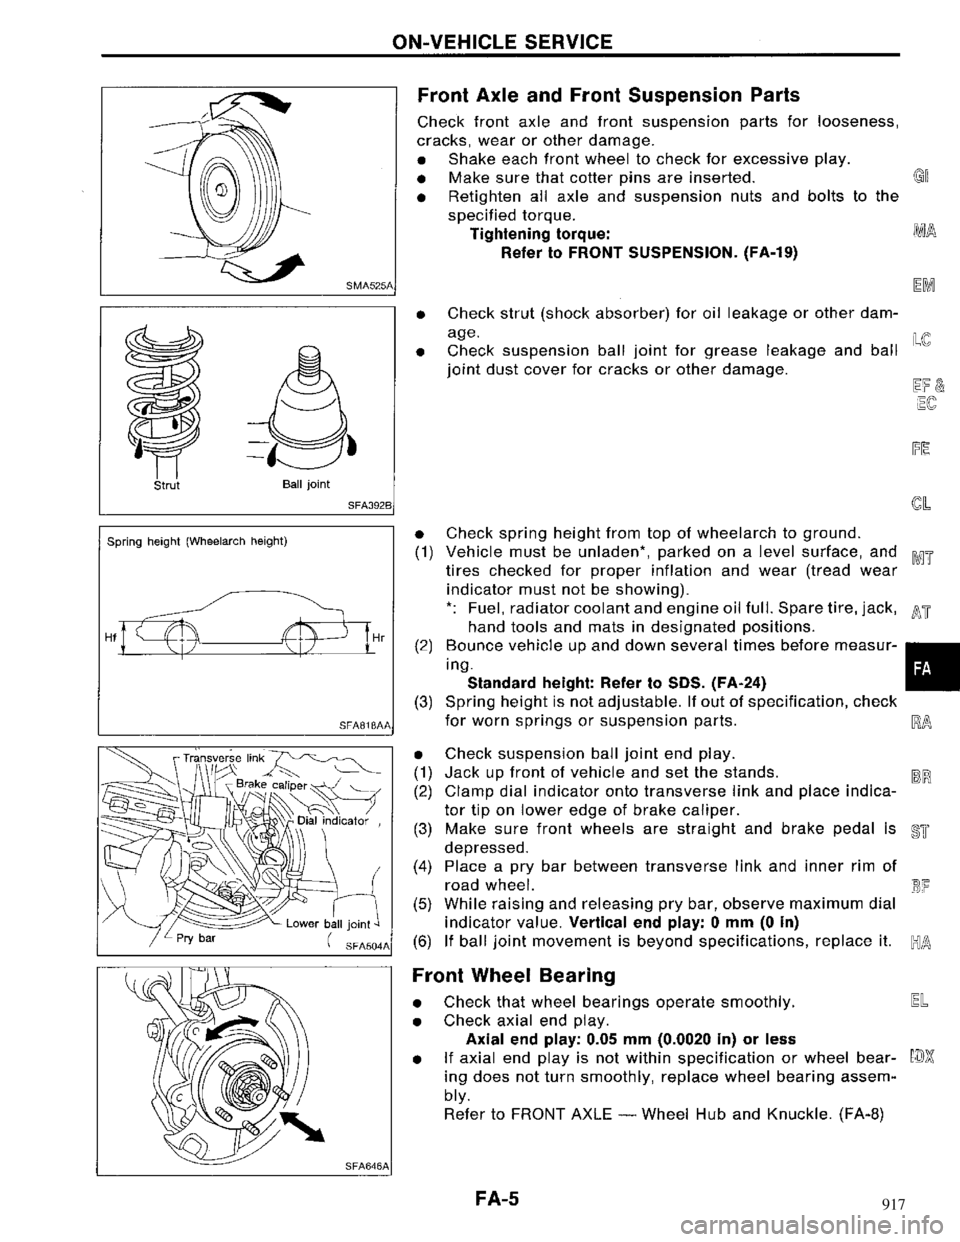 NISSAN MAXIMA 1994 A32 / 4.G Front Suspension Workshop Manual 917 